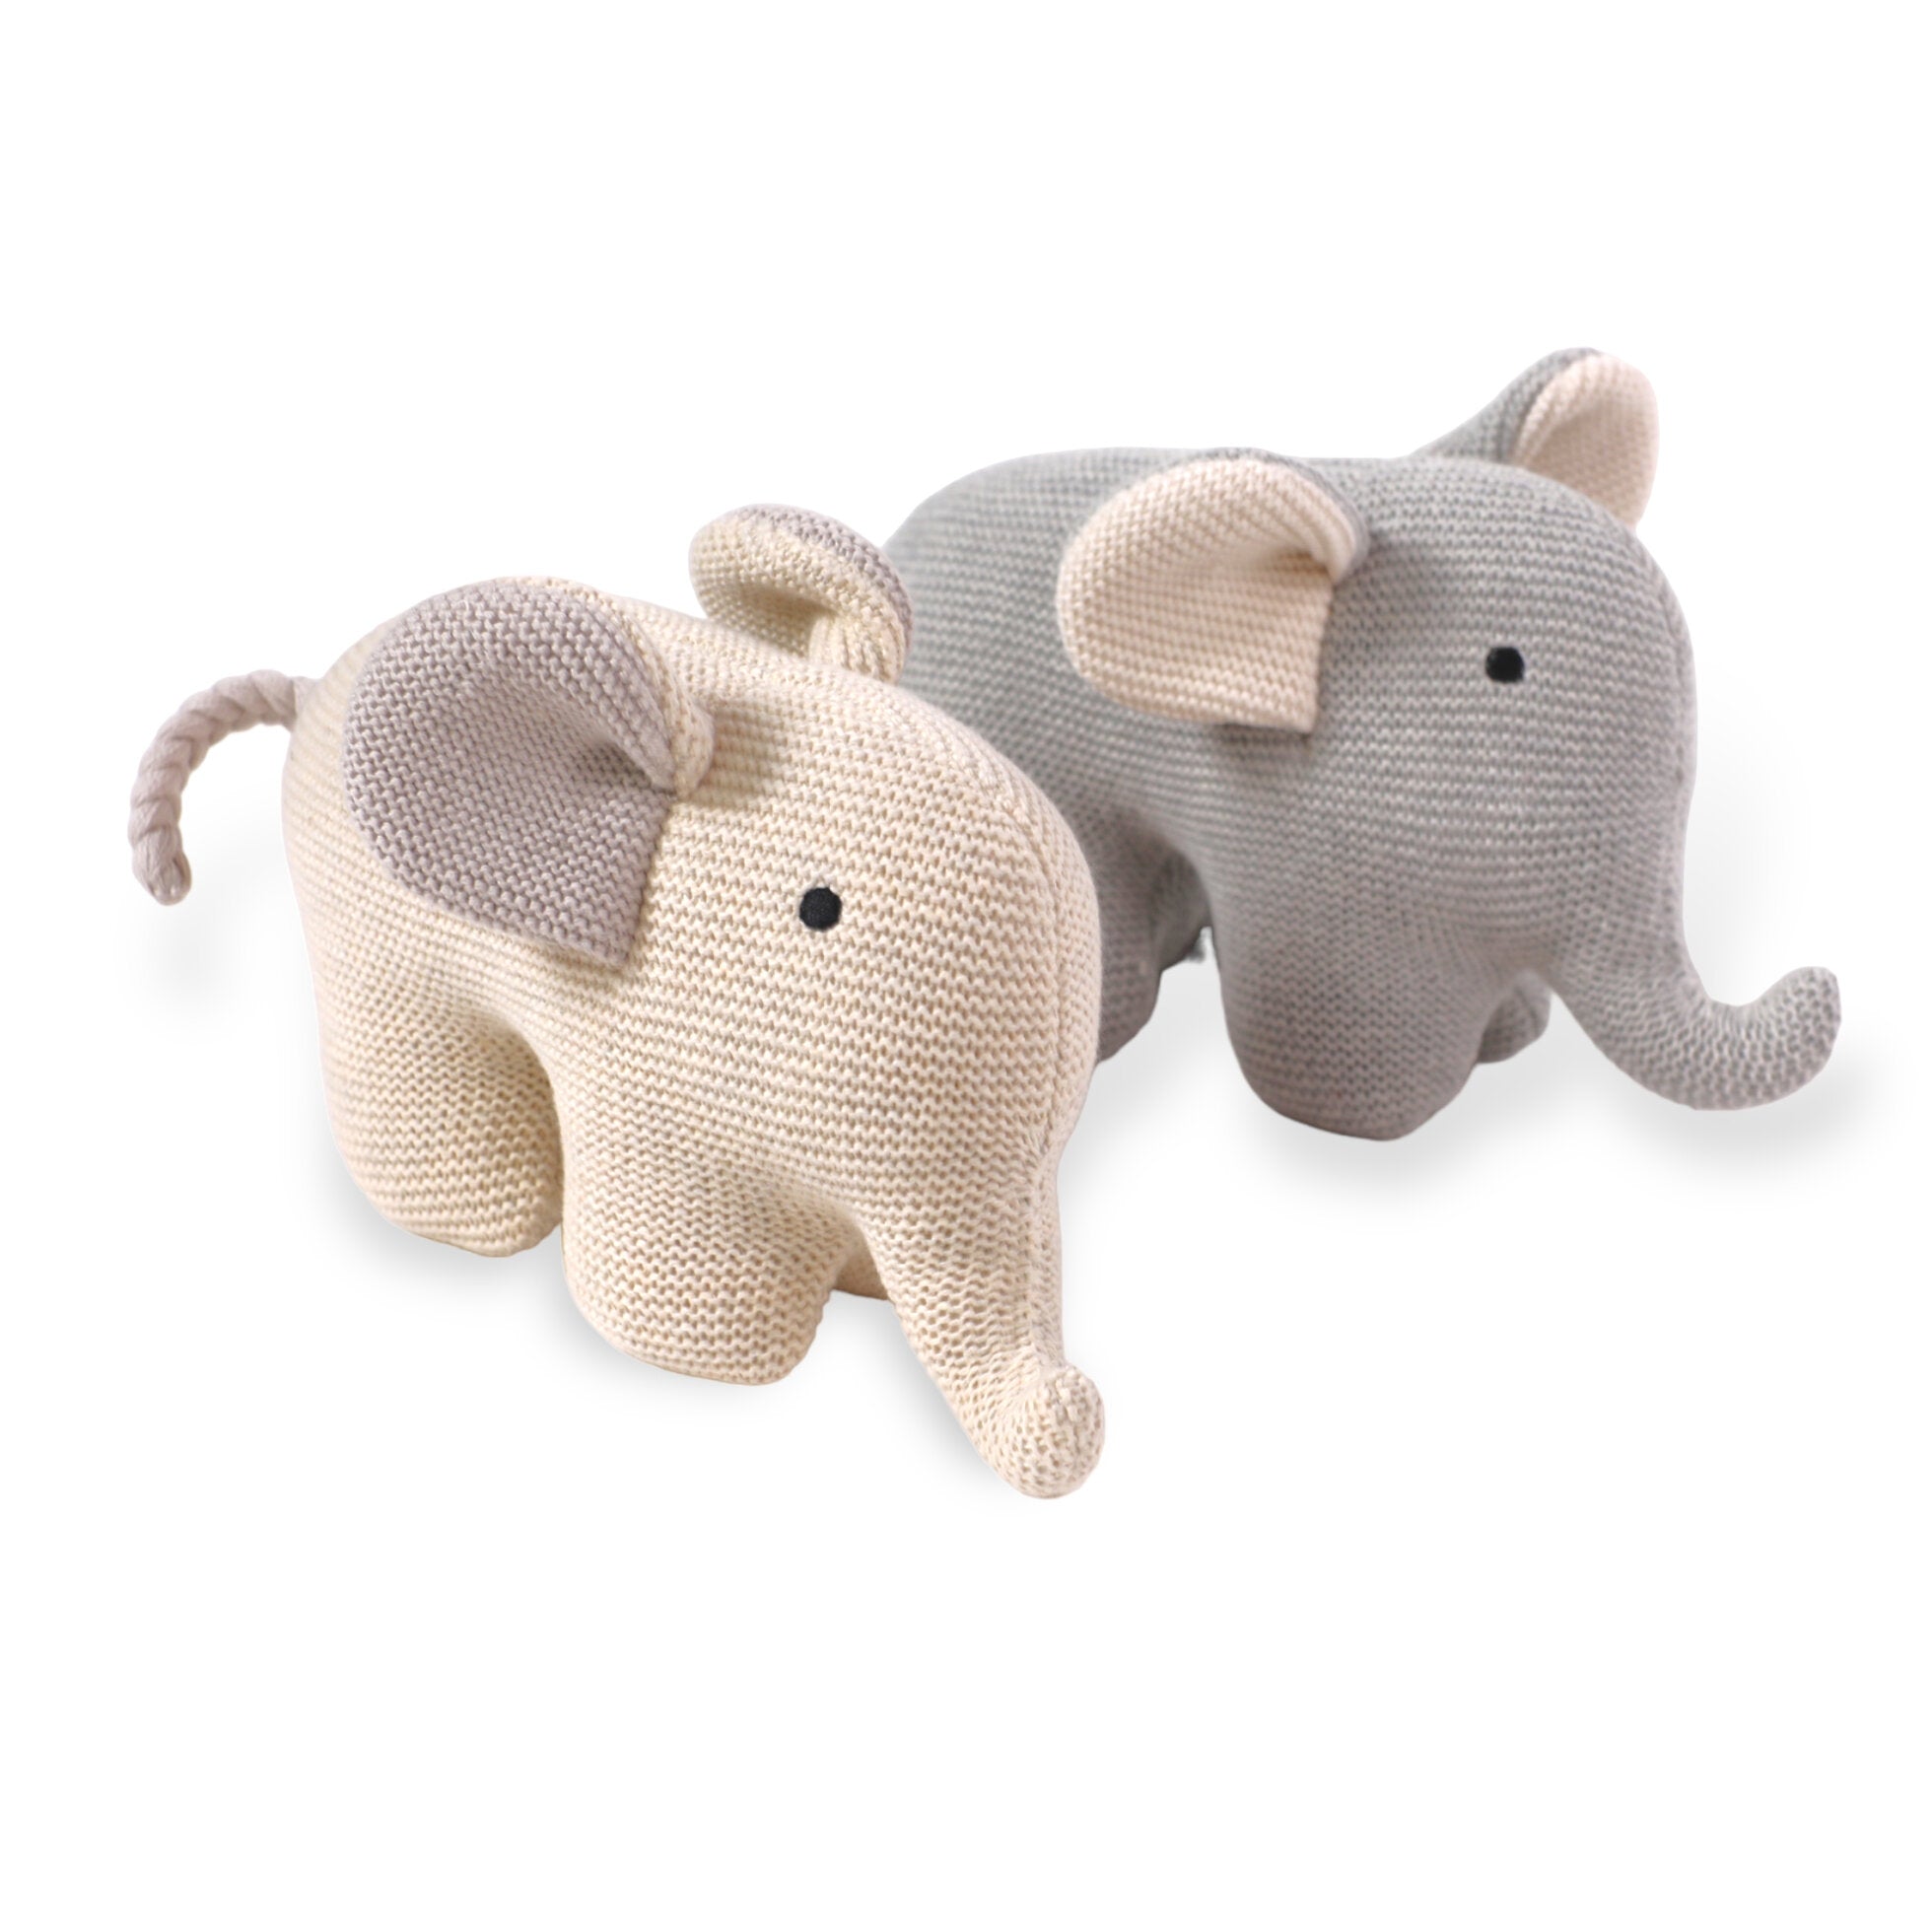 Elephant Knit Stuffed Animal Baby Toy (Organic Cotton) by Viverano Organics